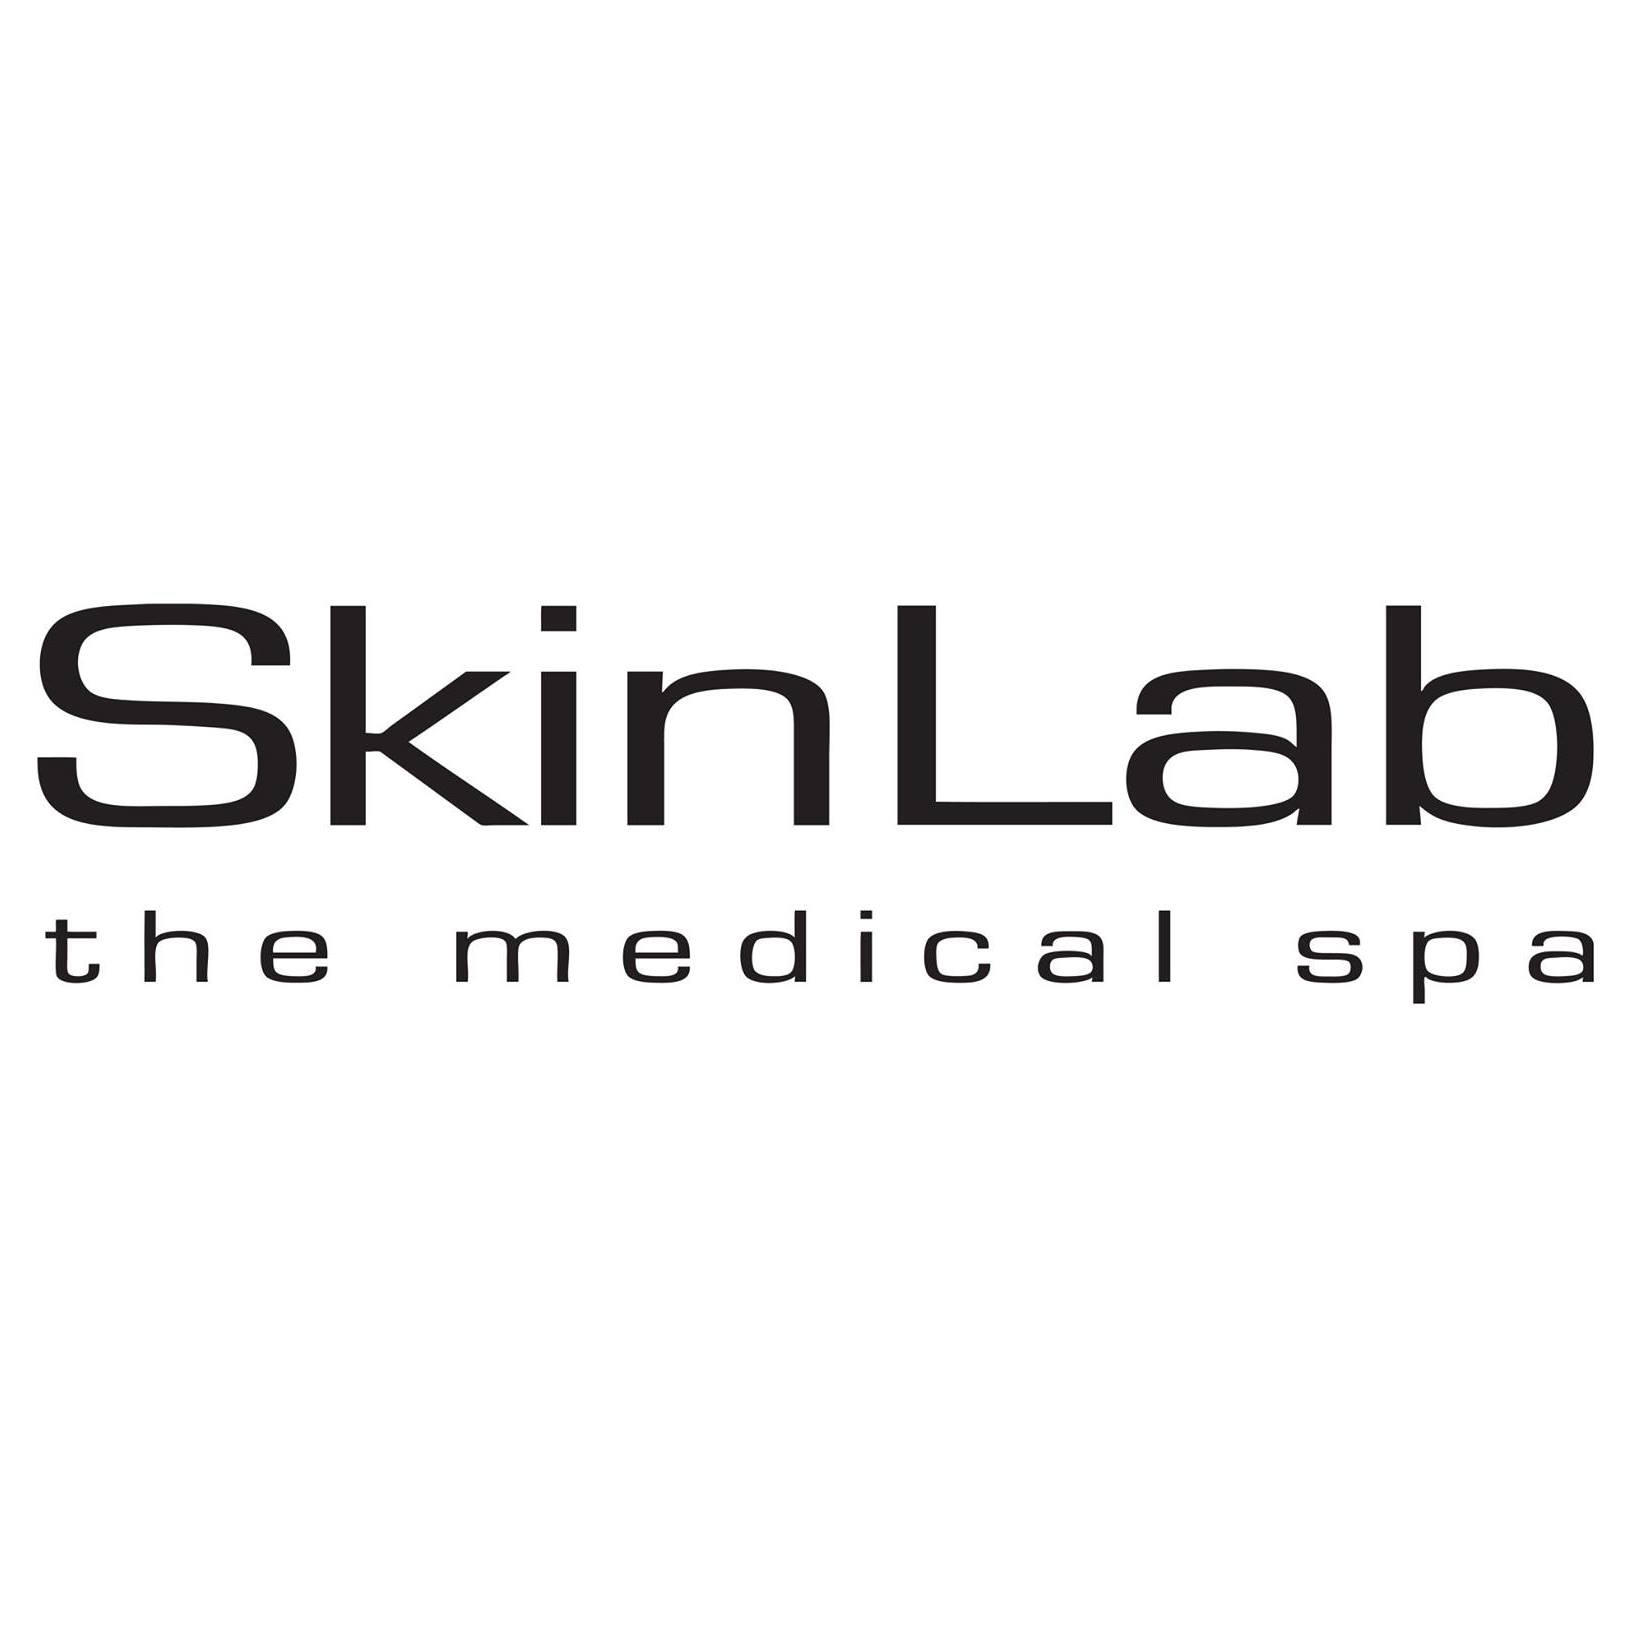 SkinLab The Medical Spa - Logo